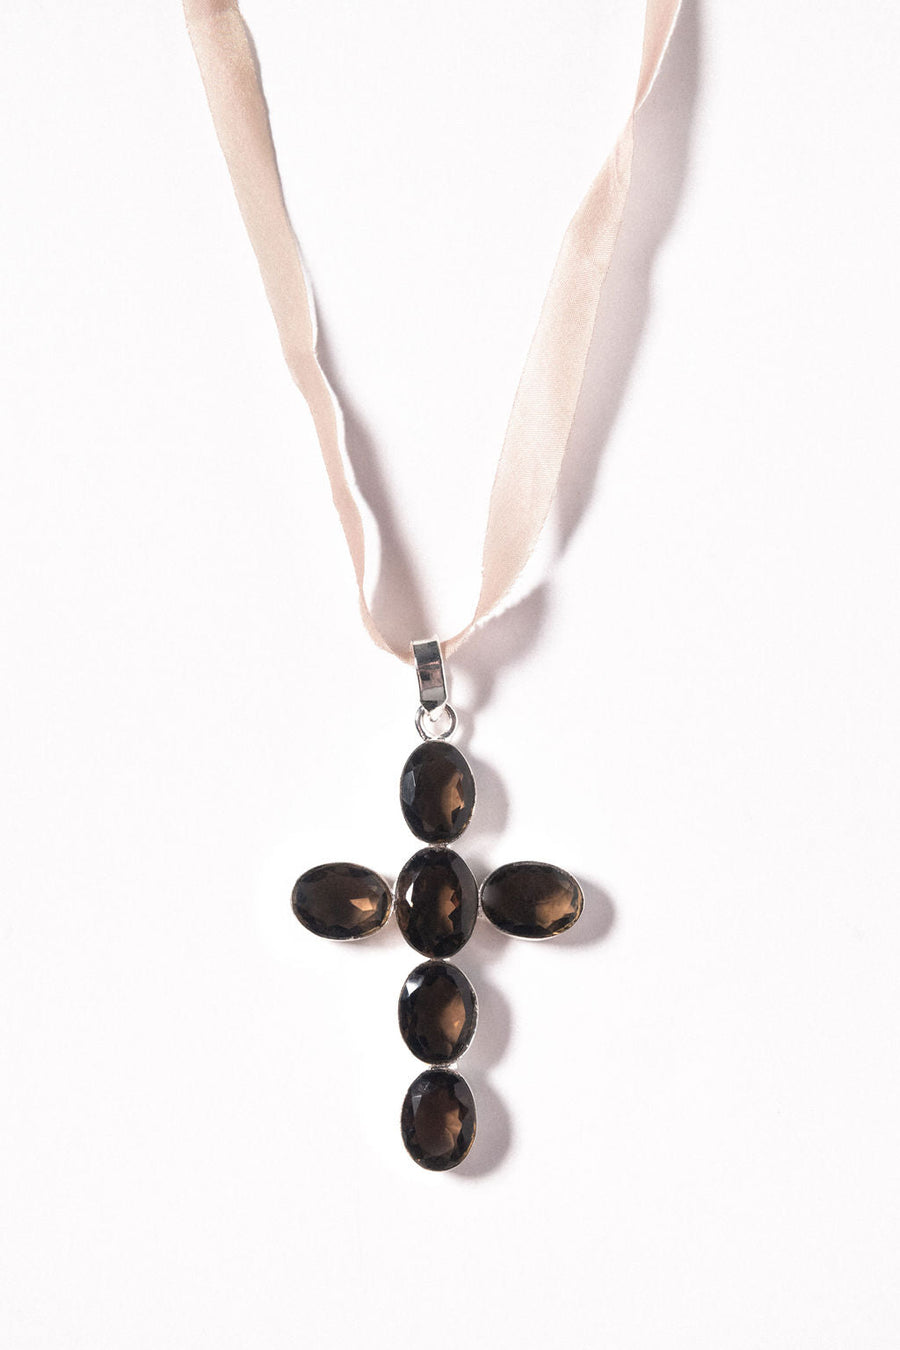 DZI Creations Jewelry Ribbon Jane Austen Cross Necklace